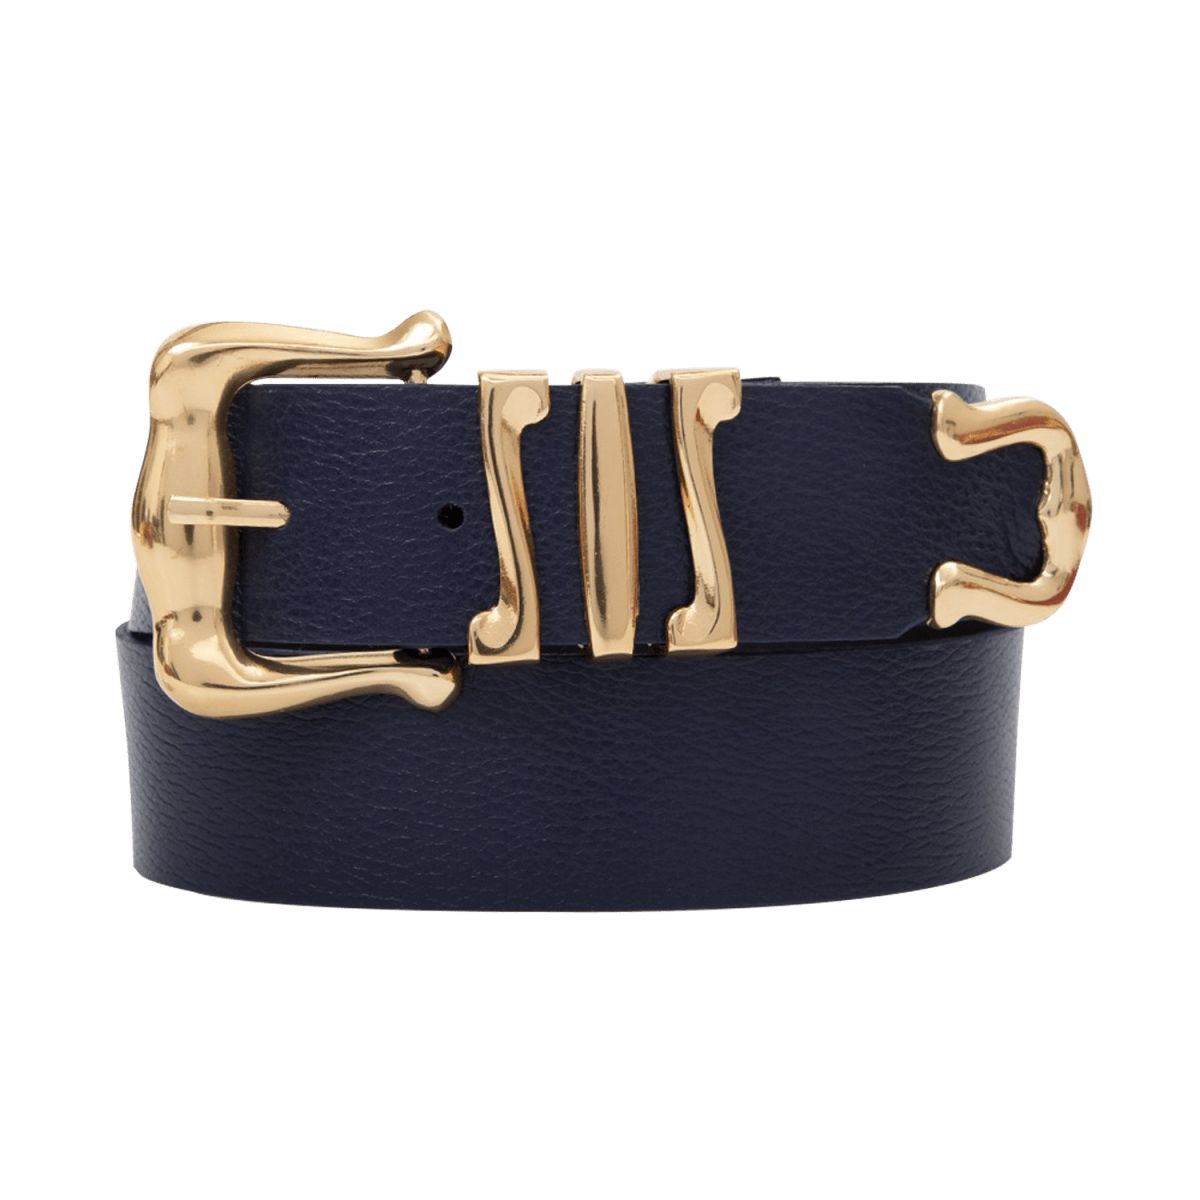 Gold Metal Buckle Leather Belt - Navy Blue | Wolf & Badger (US)